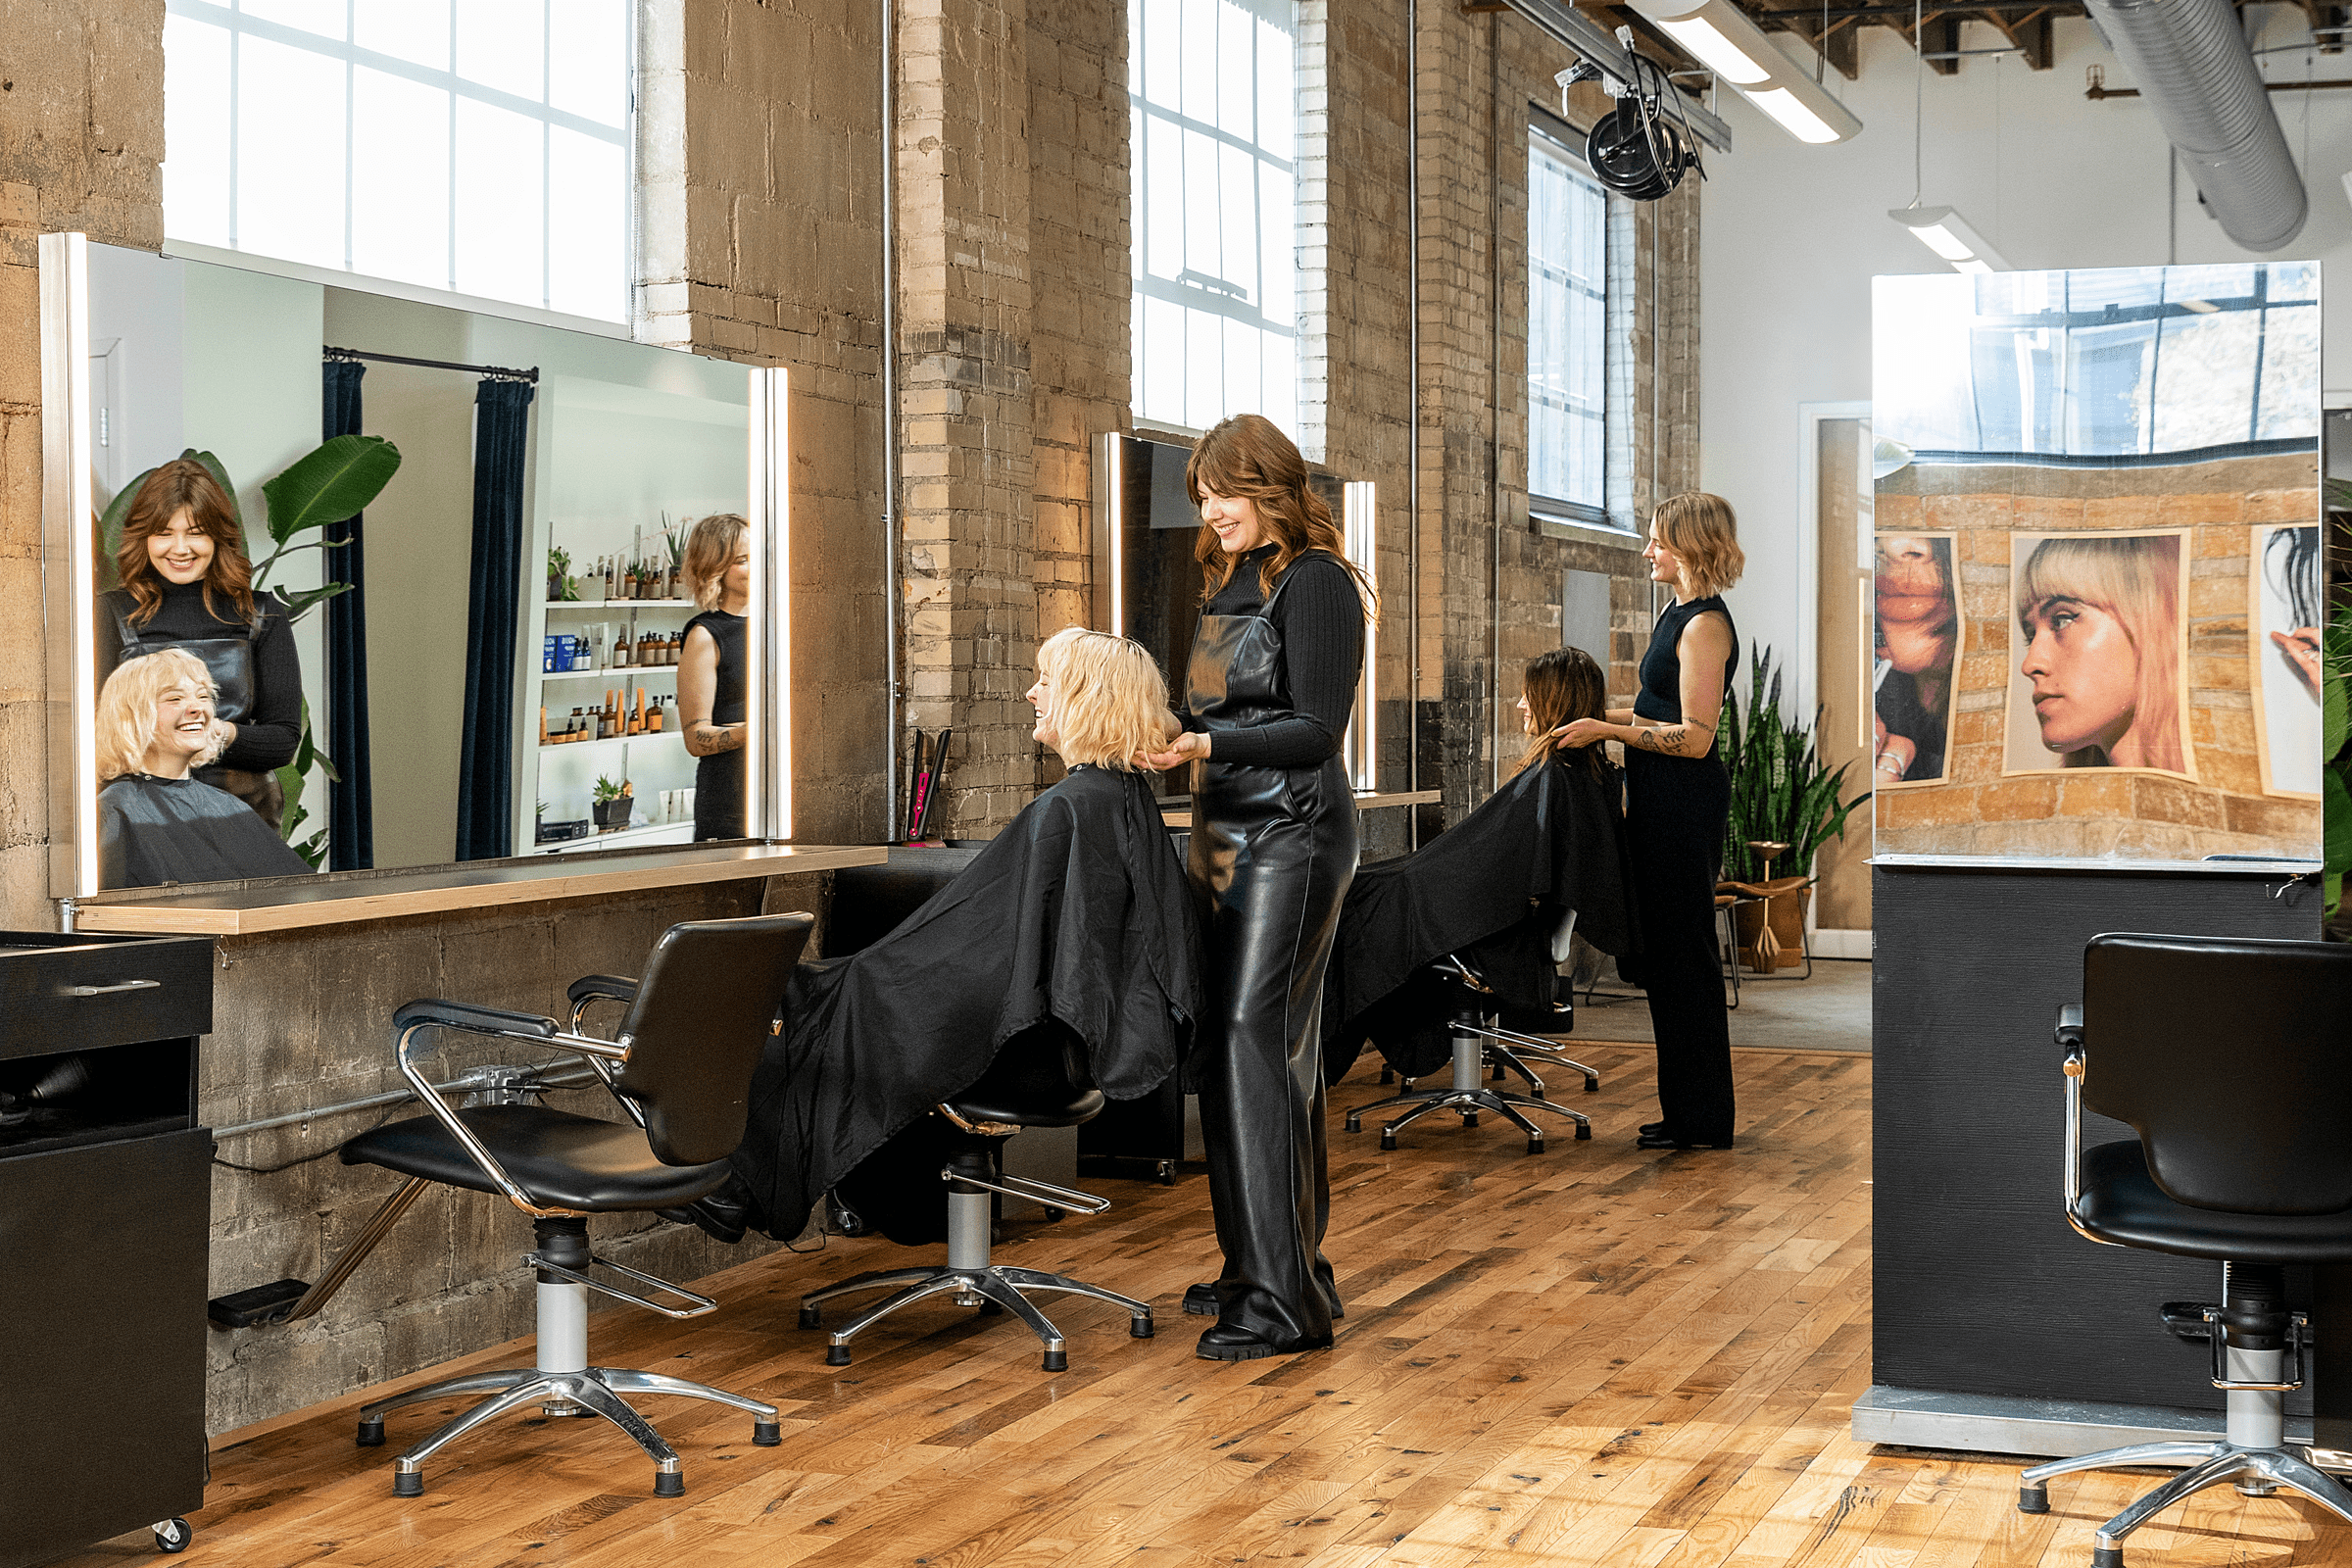 Salon Services - What's New Salon & Barber